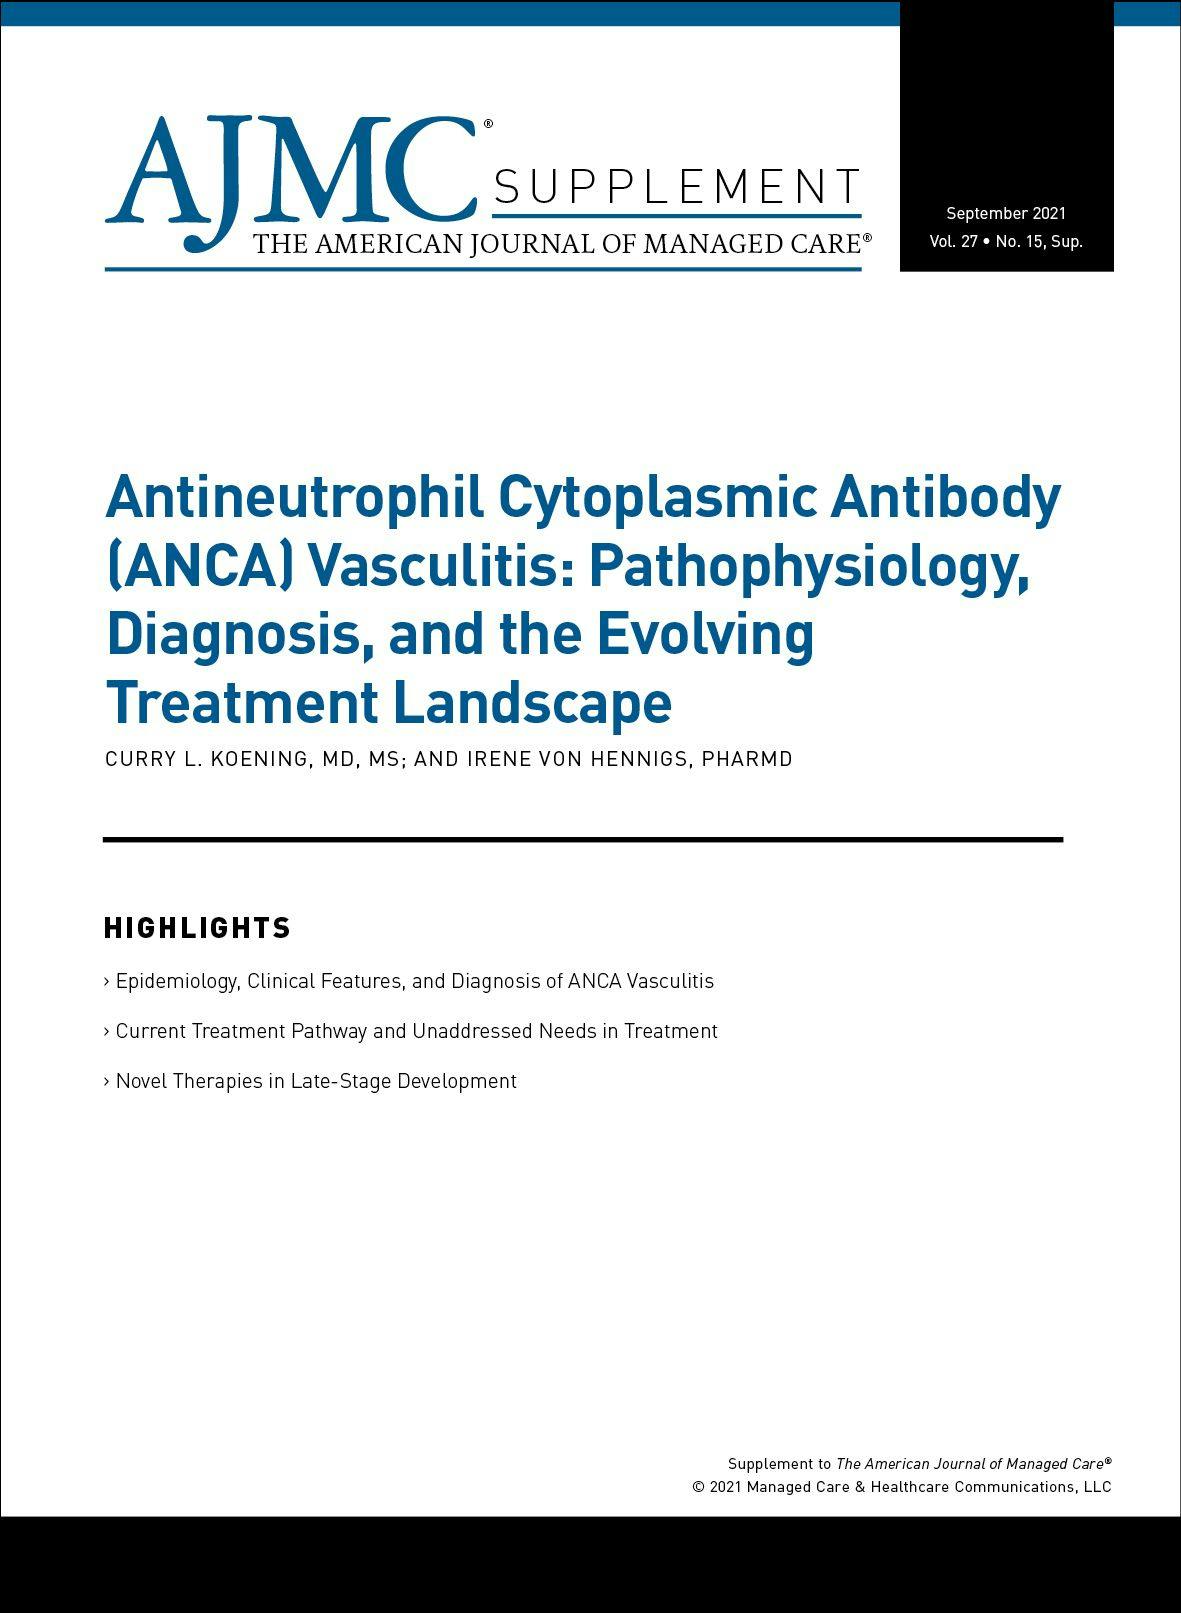 Antineutrophil Cytoplasmic Antibody (ANCA) Vasculitis: Pathophysiology, Diagnosis, and the Evolving Treatment Landscape